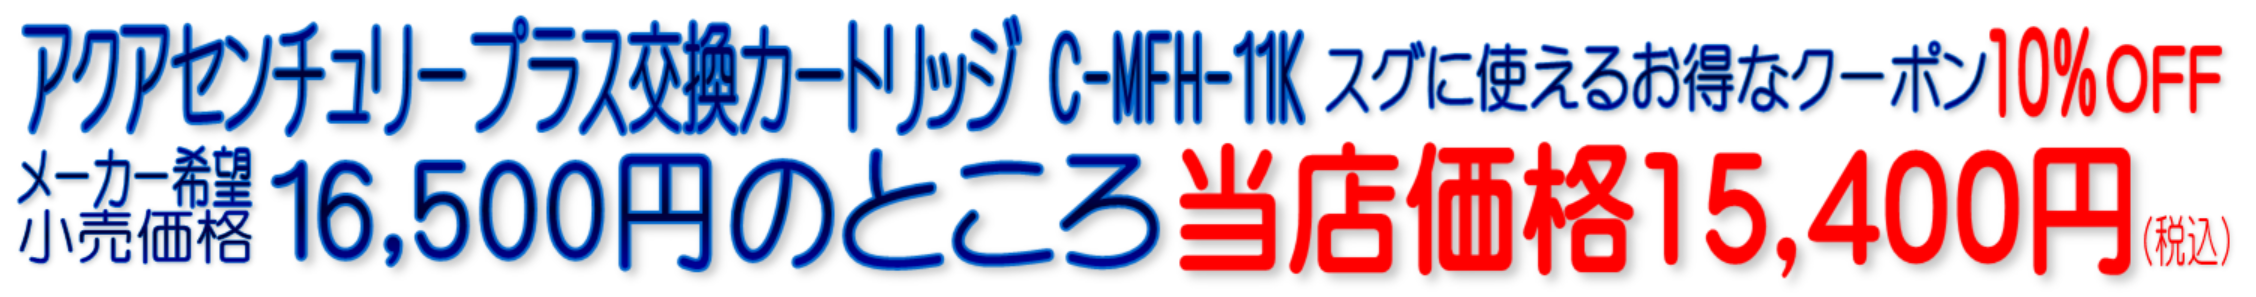 MFH-11K2 C-MFH-11K2 アクアセンチュリープラス